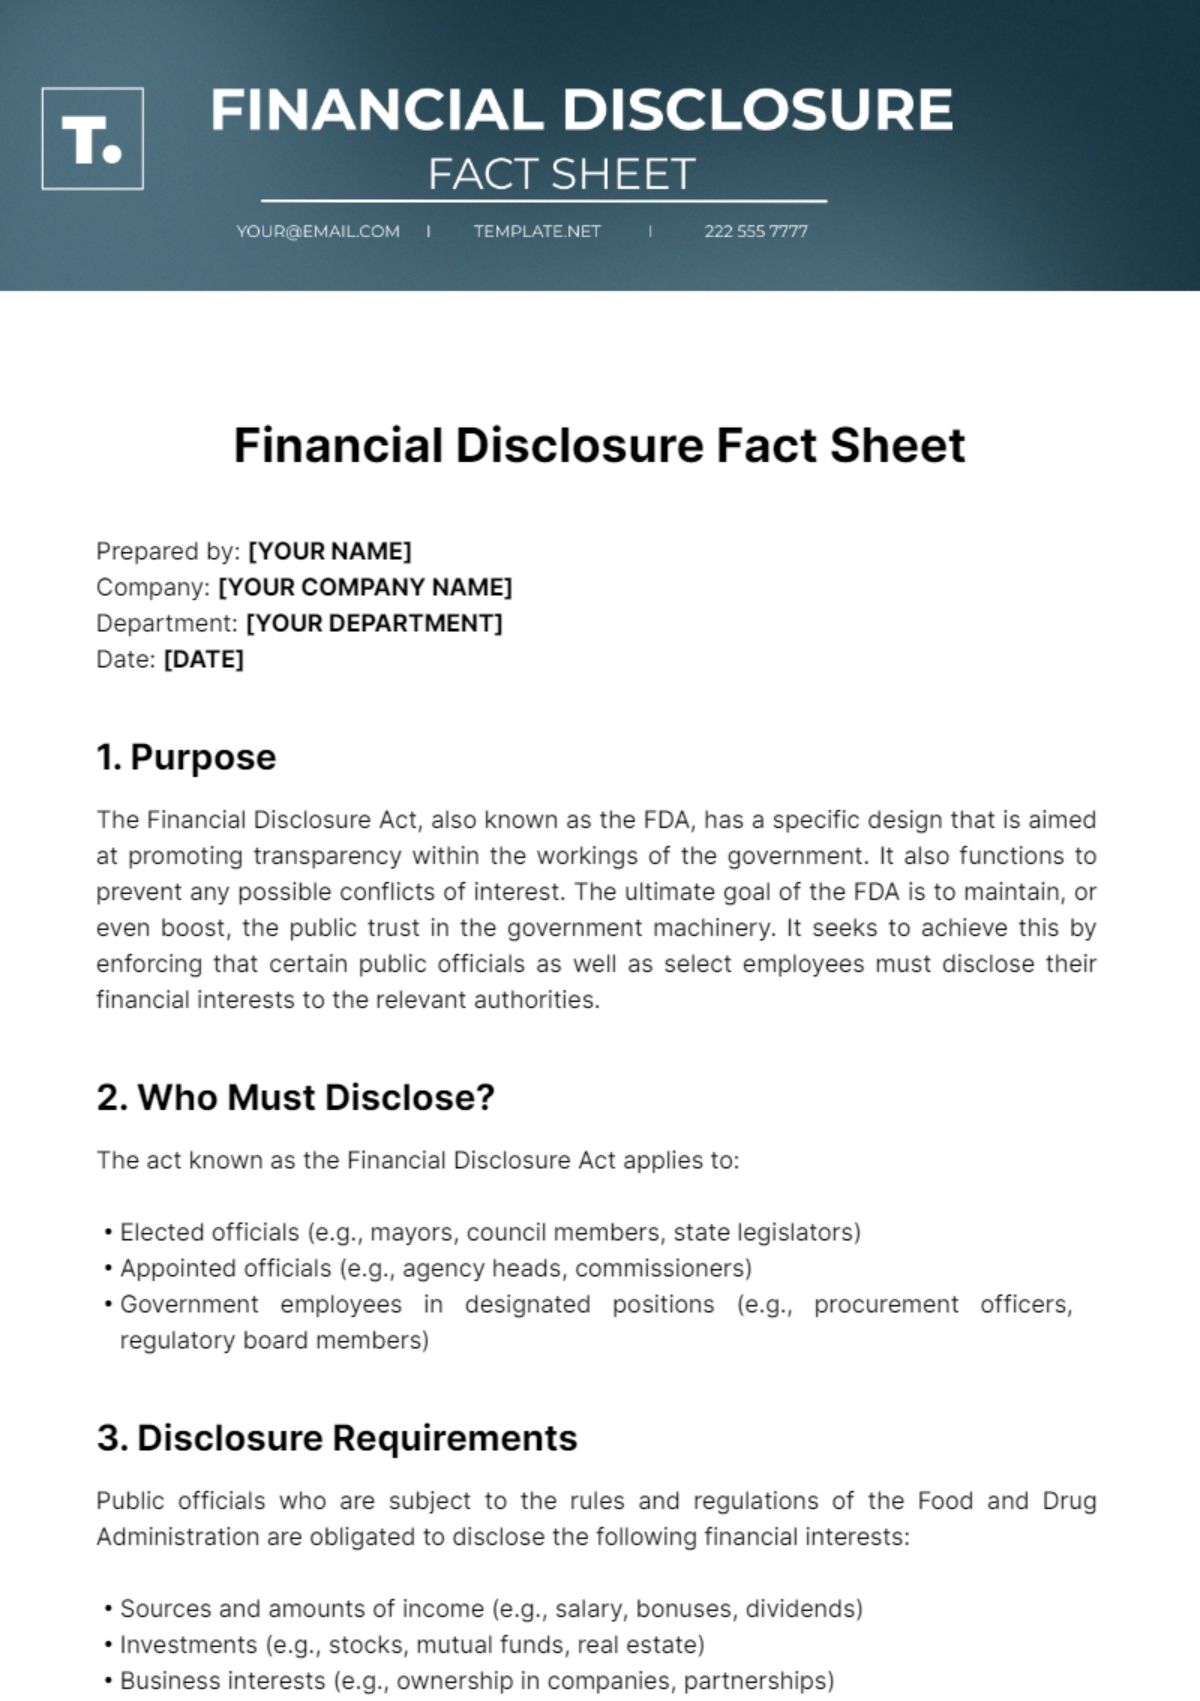 Financial Disclosure Act Fact Sheet Template